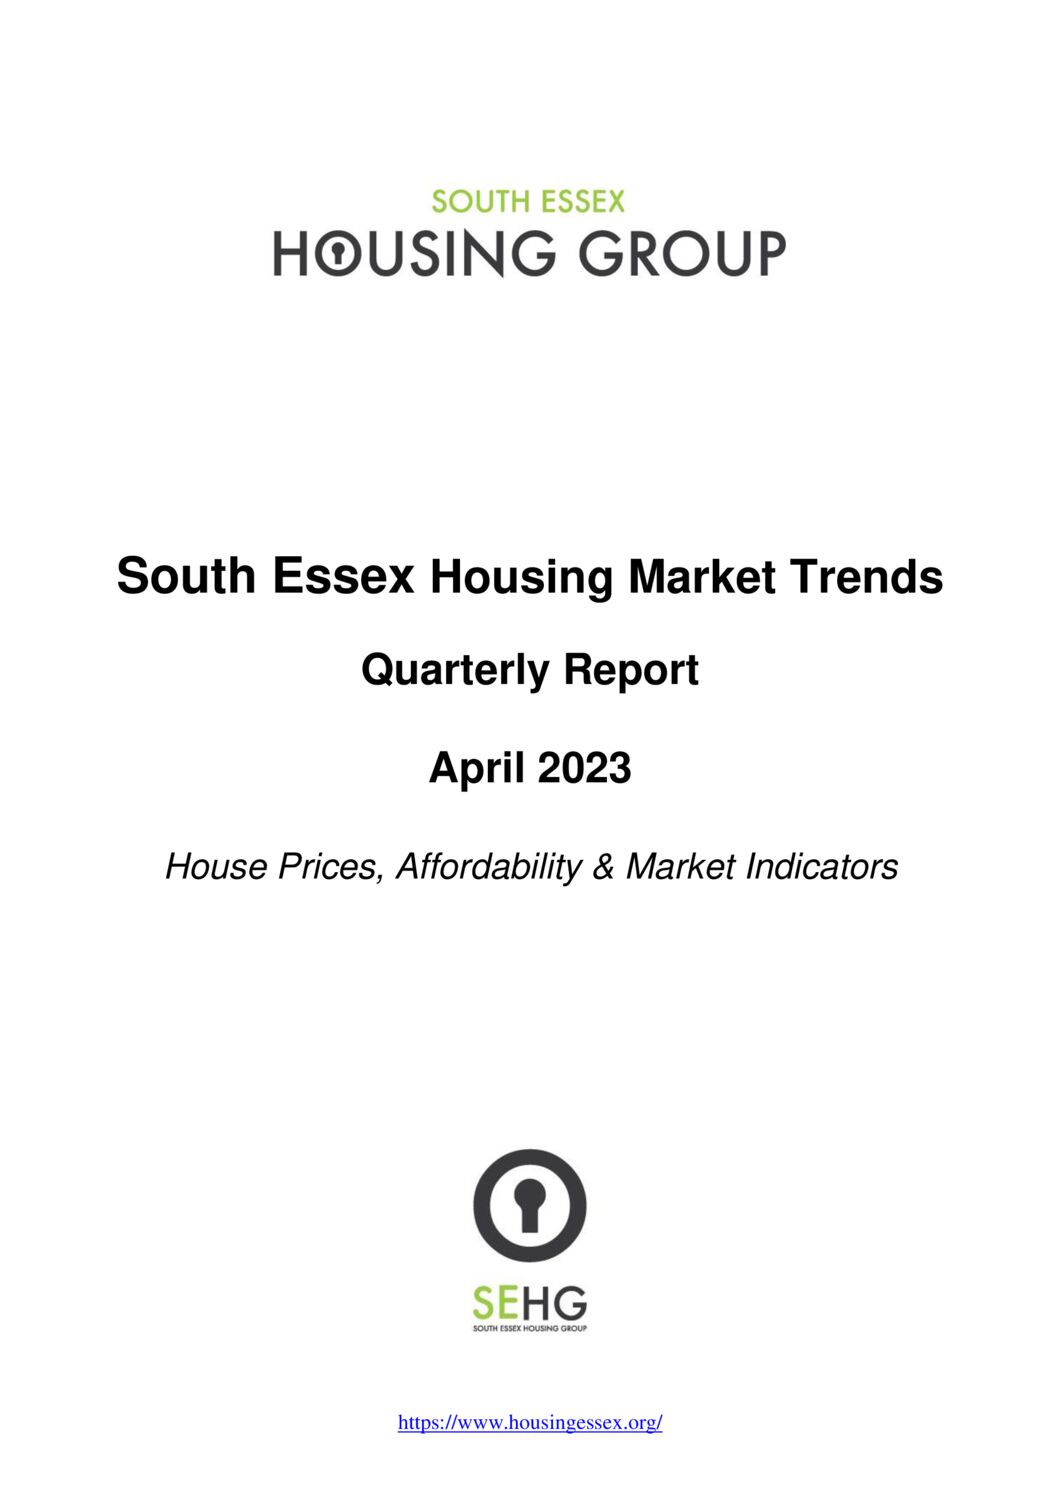 South Essex Housing Market Trends Report April 2023